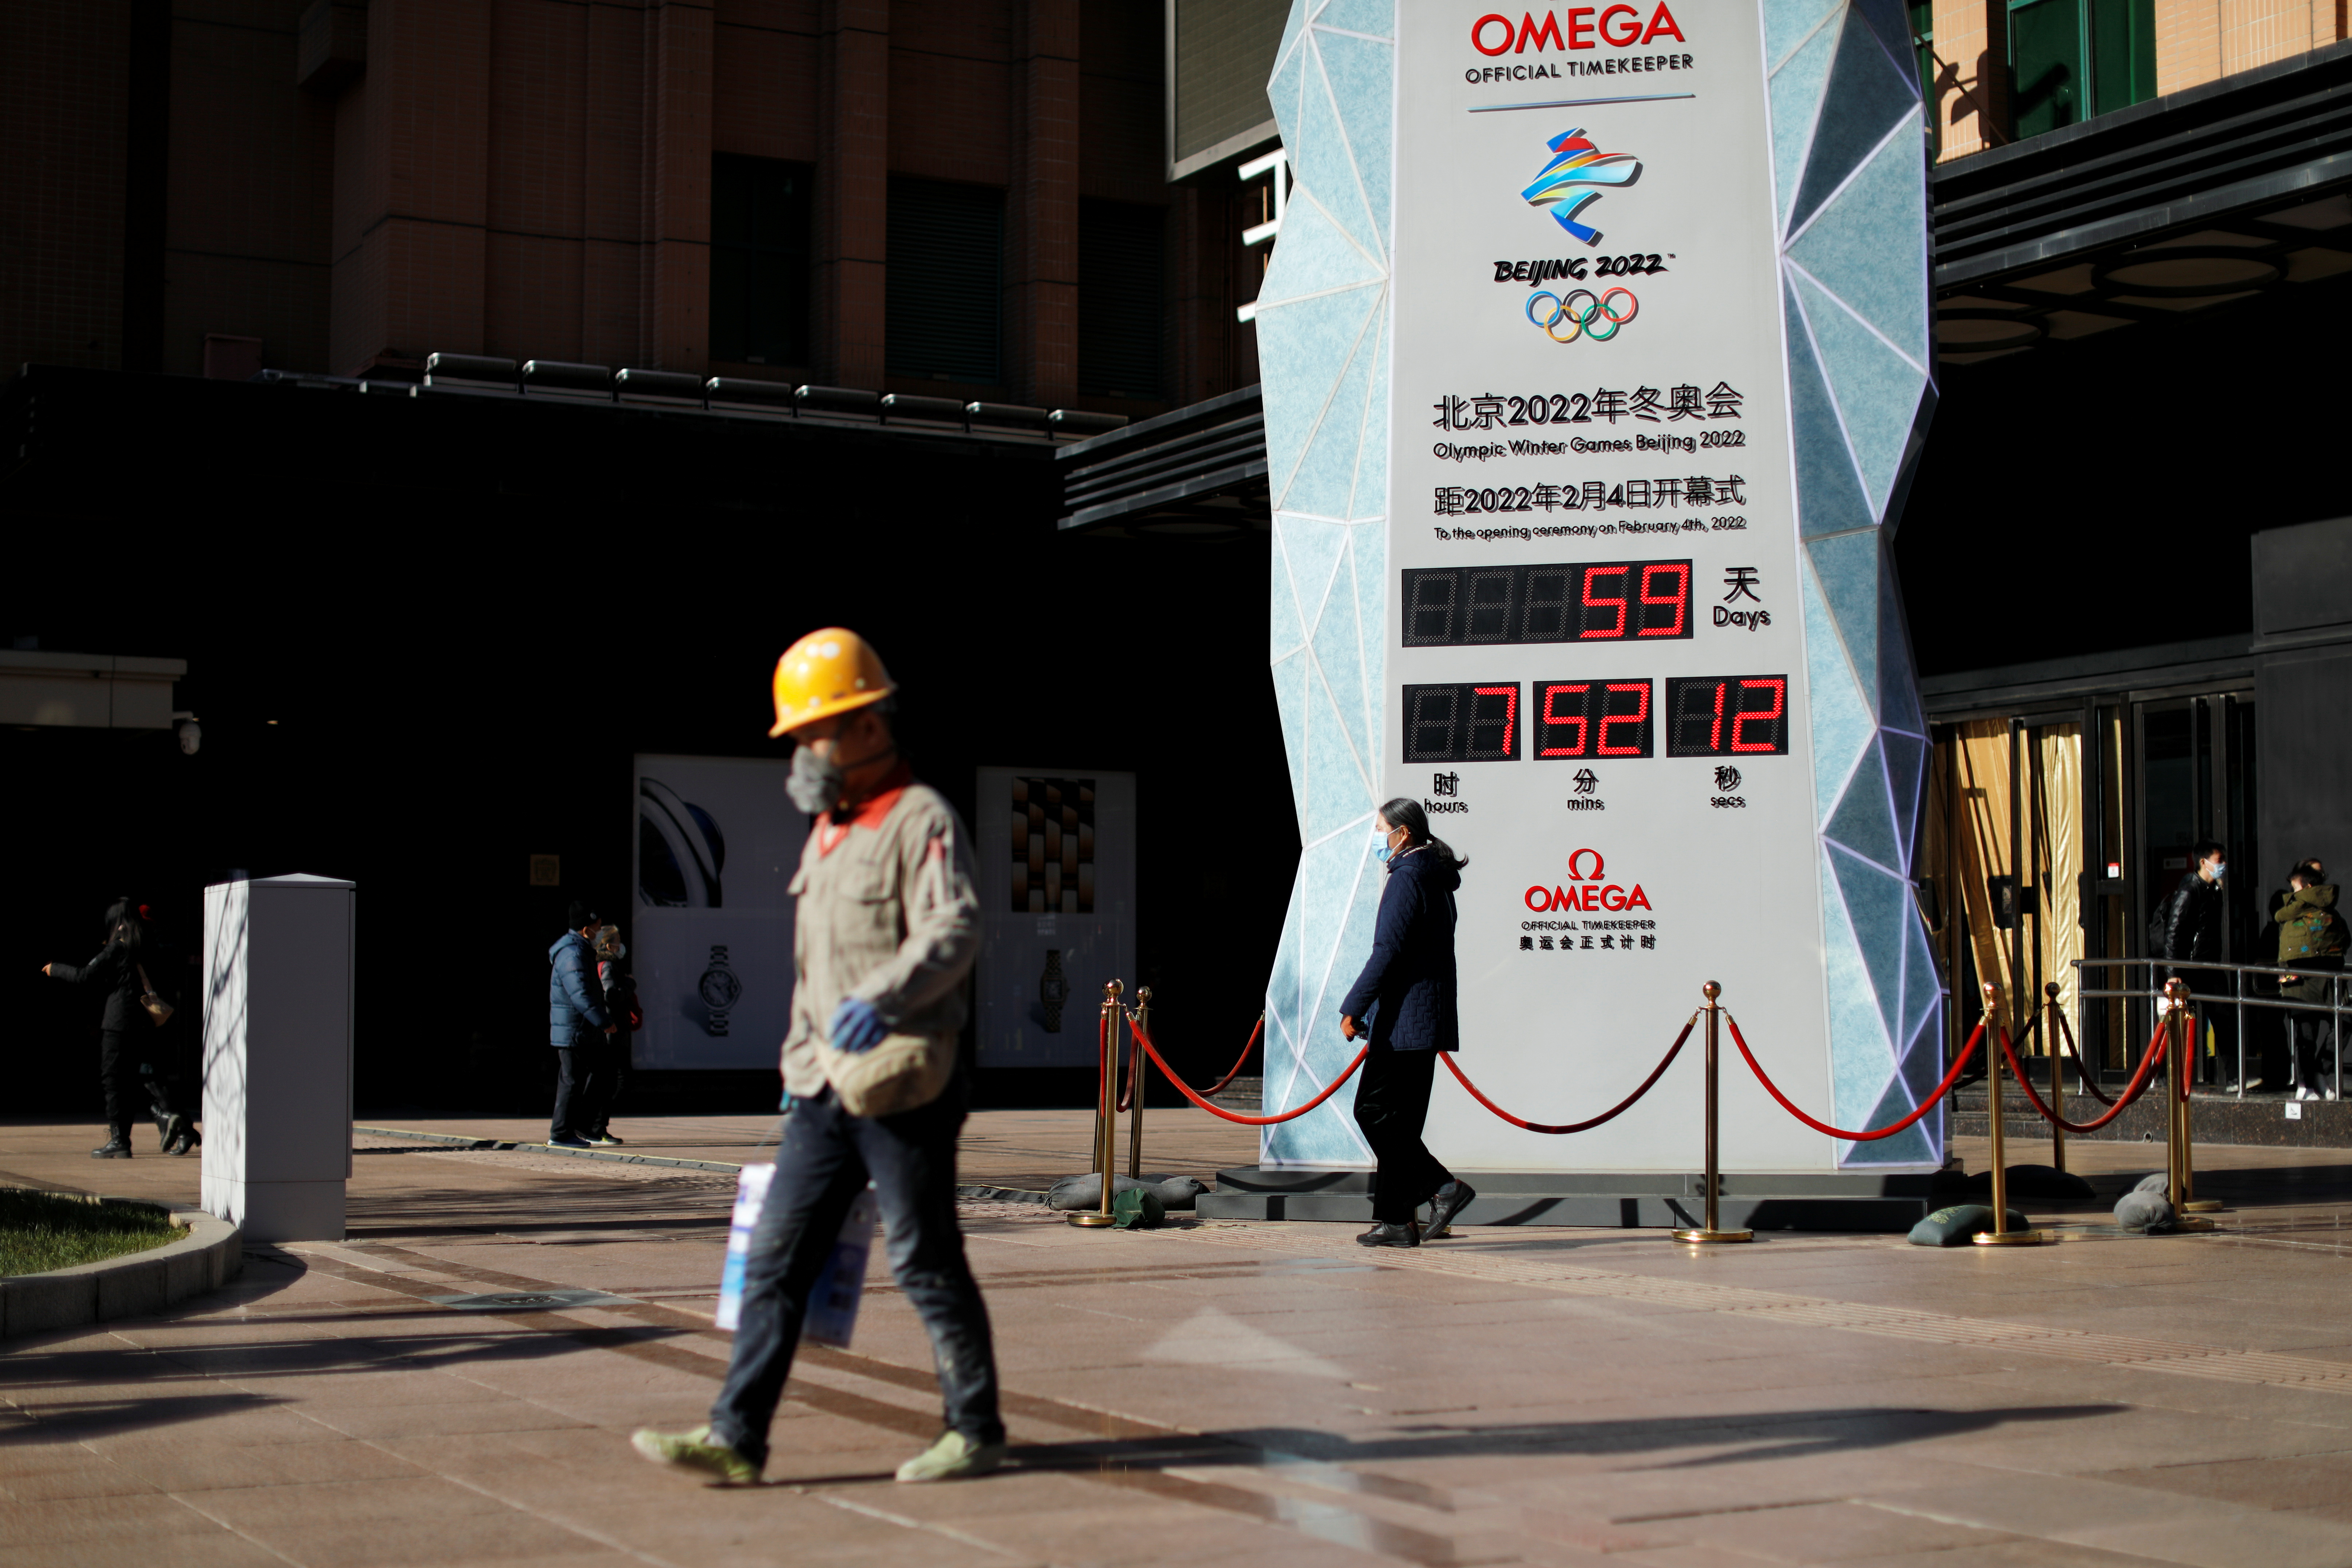 Countdown clock for the Beijing 2022 Winter Olympic Games in Beijing